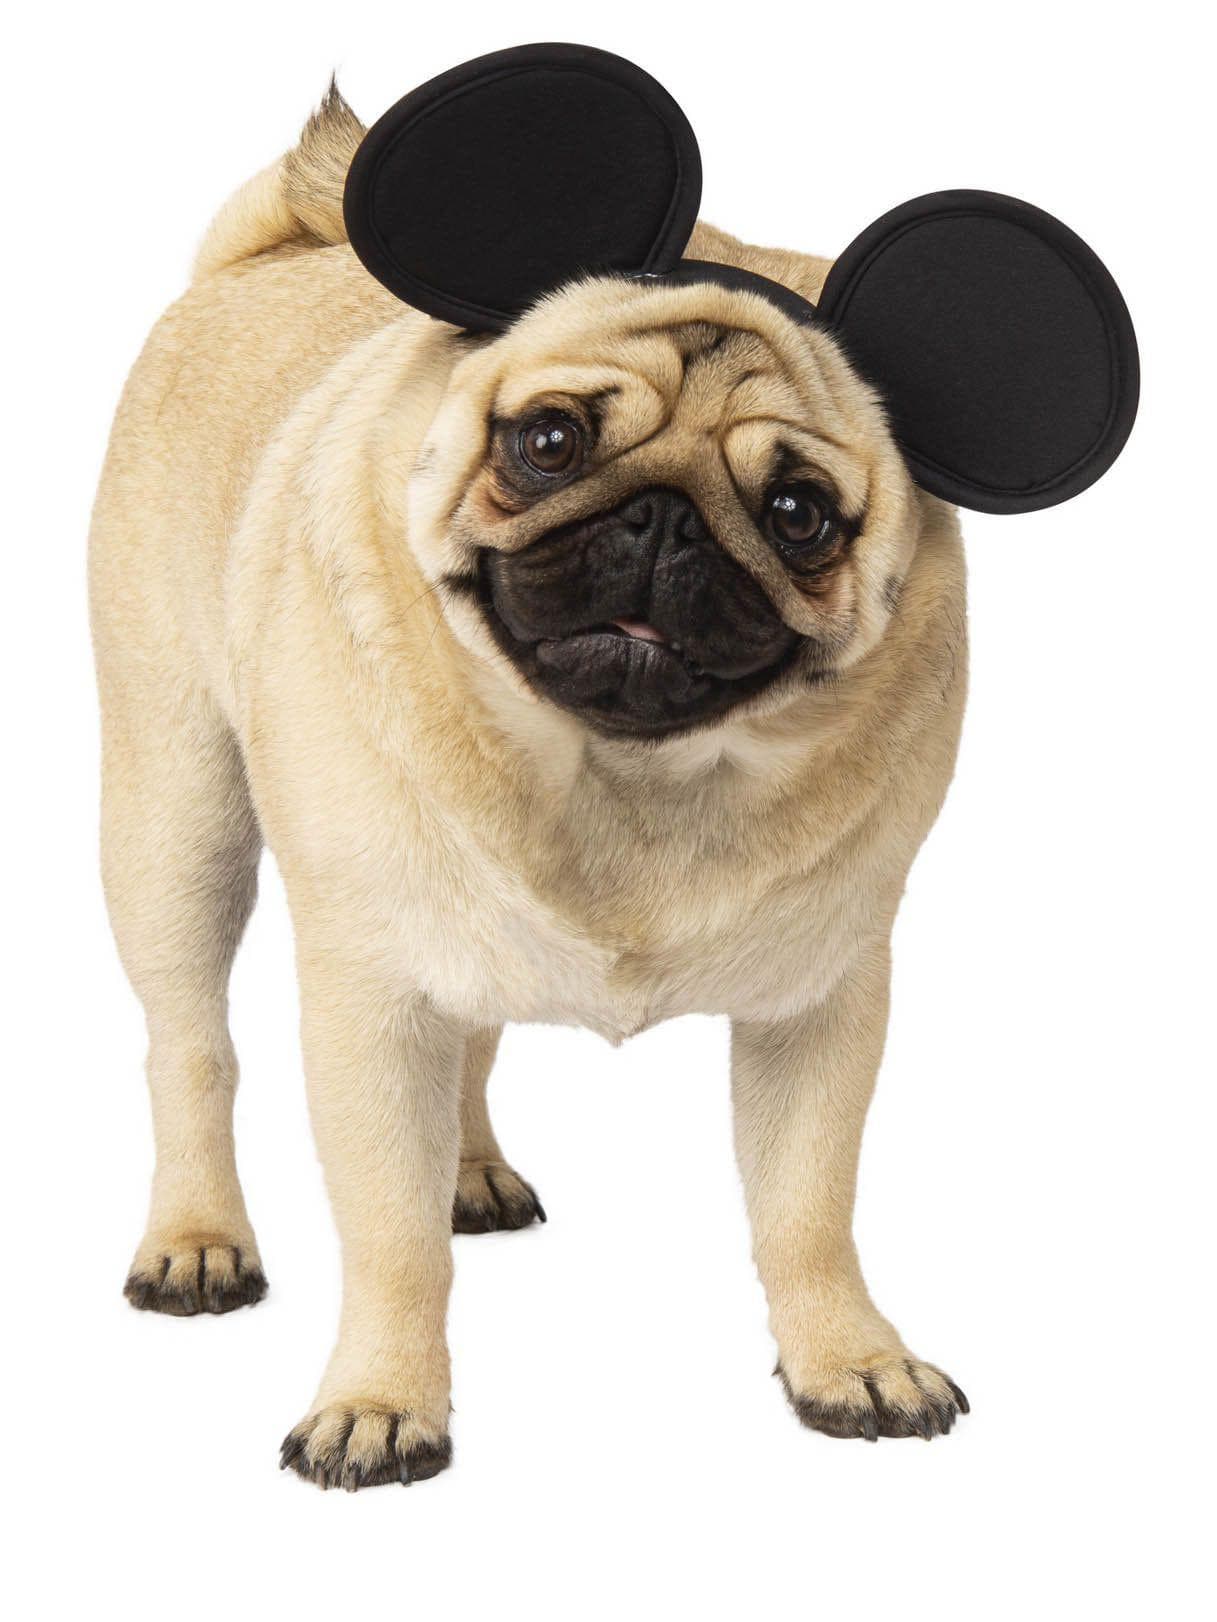 Mickey Mouse Ears Pet Headpiece - costumes.com